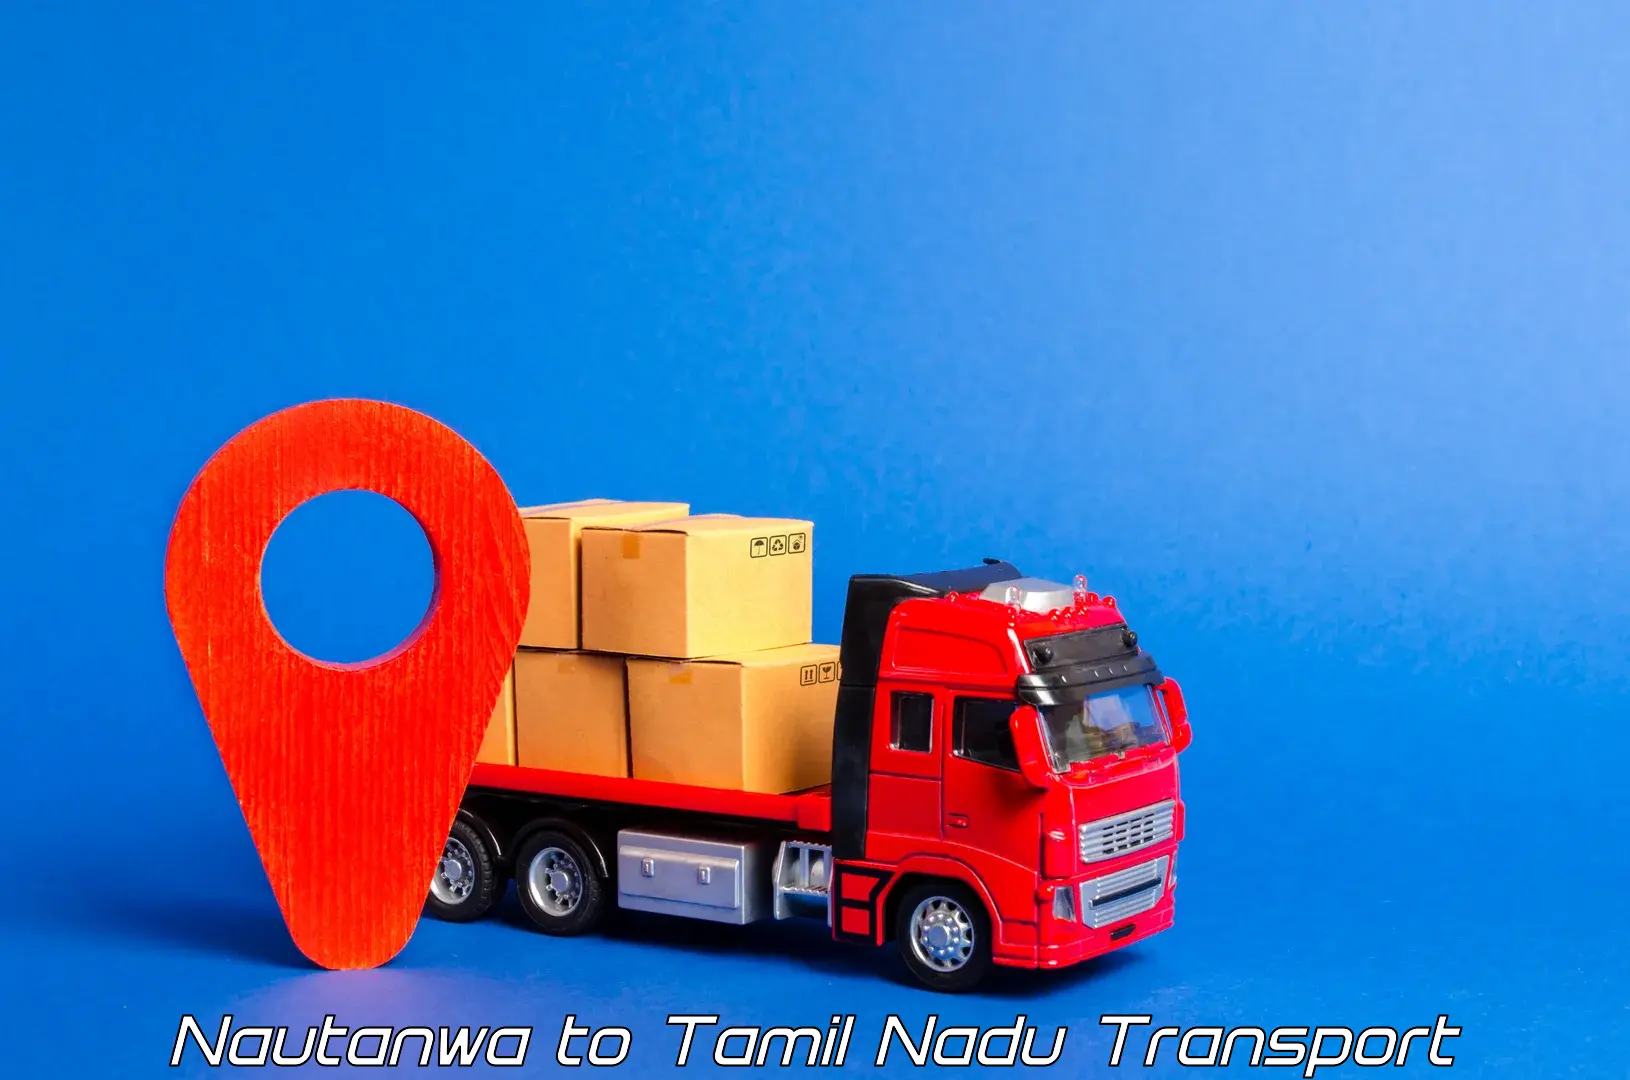 International cargo transportation services Nautanwa to Perunali